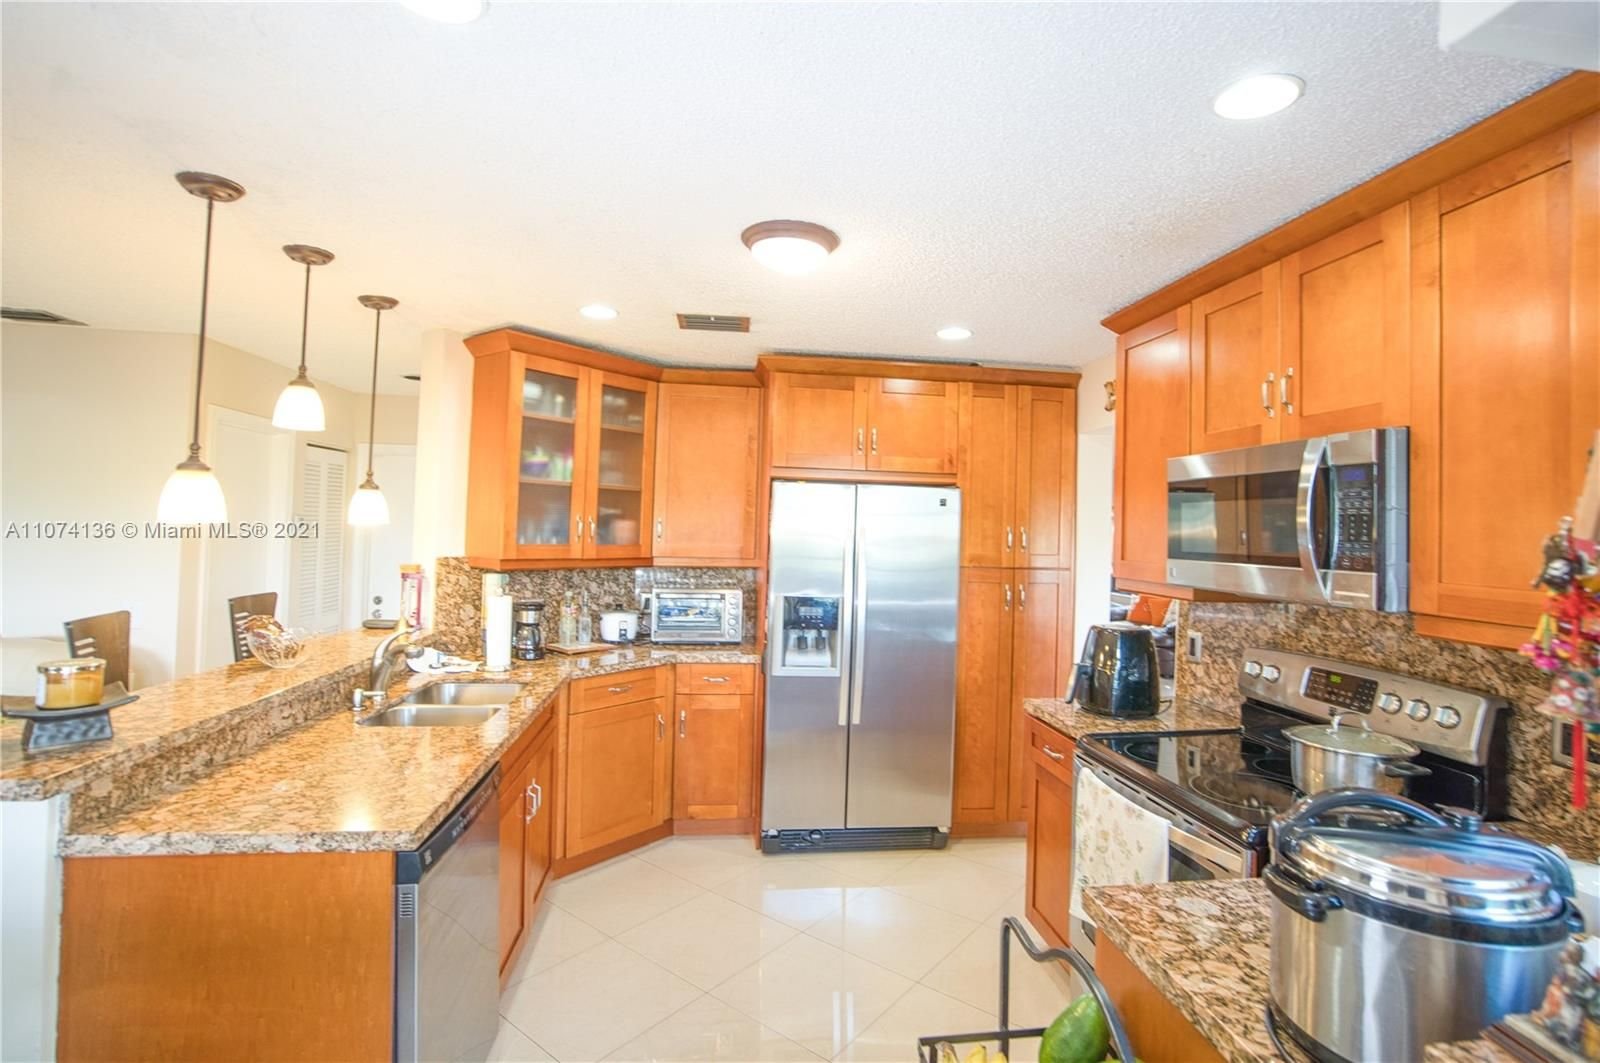 Real estate property located at 6247 127th Ct, Miami-Dade County, Miami, FL